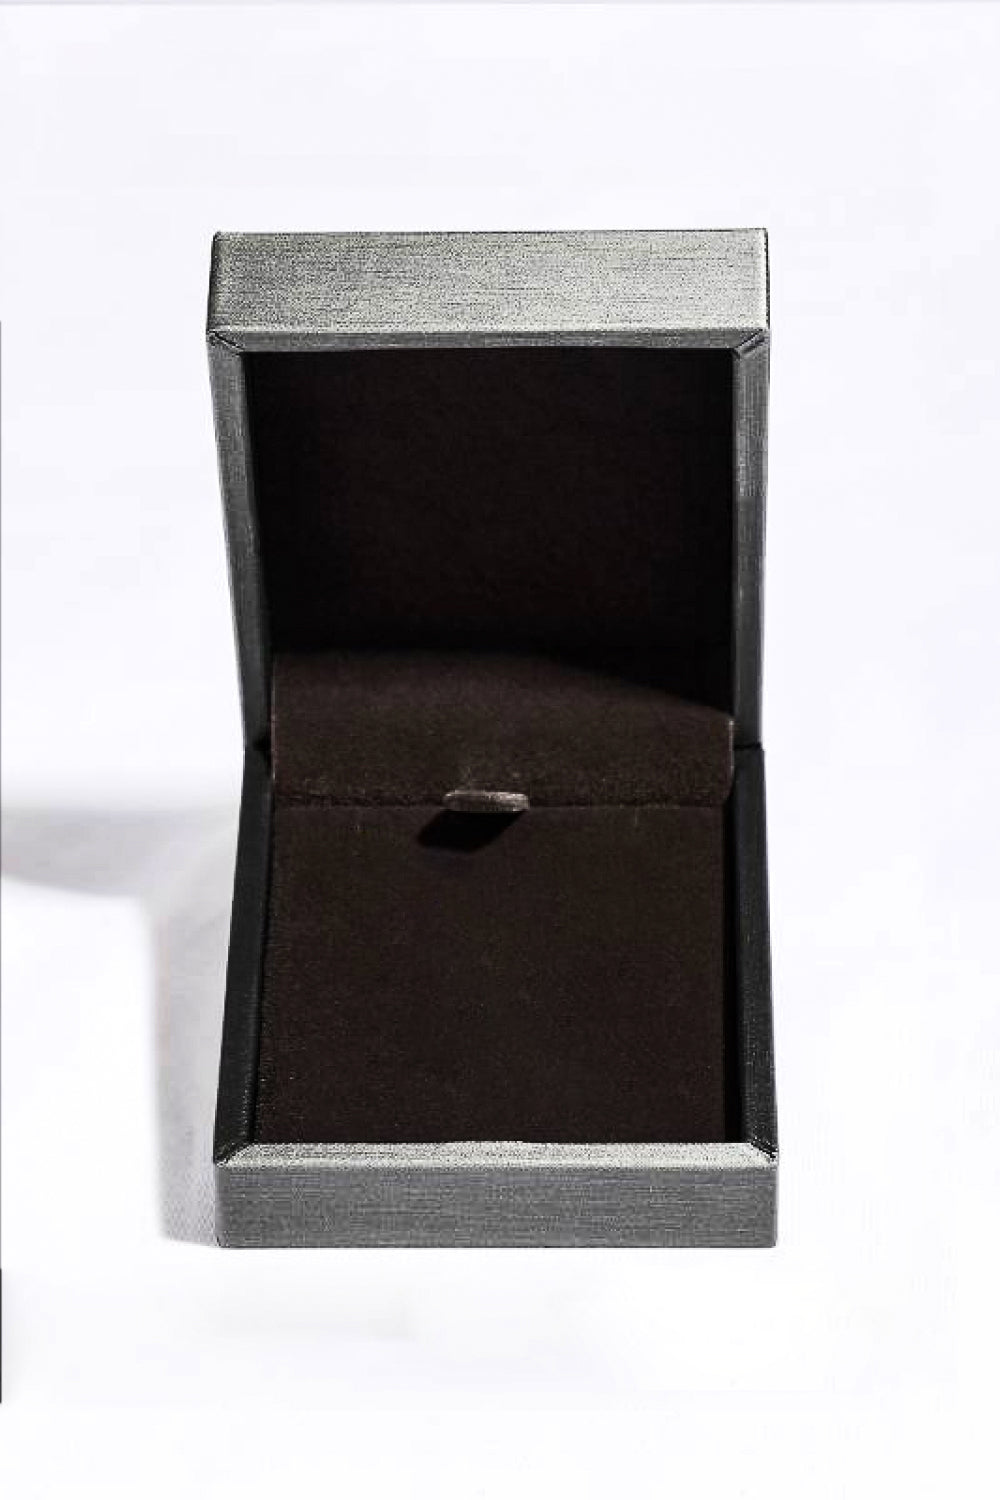 1 Carat Moissanite Platinum-Plated Key Pendant Necklace - Sparkala